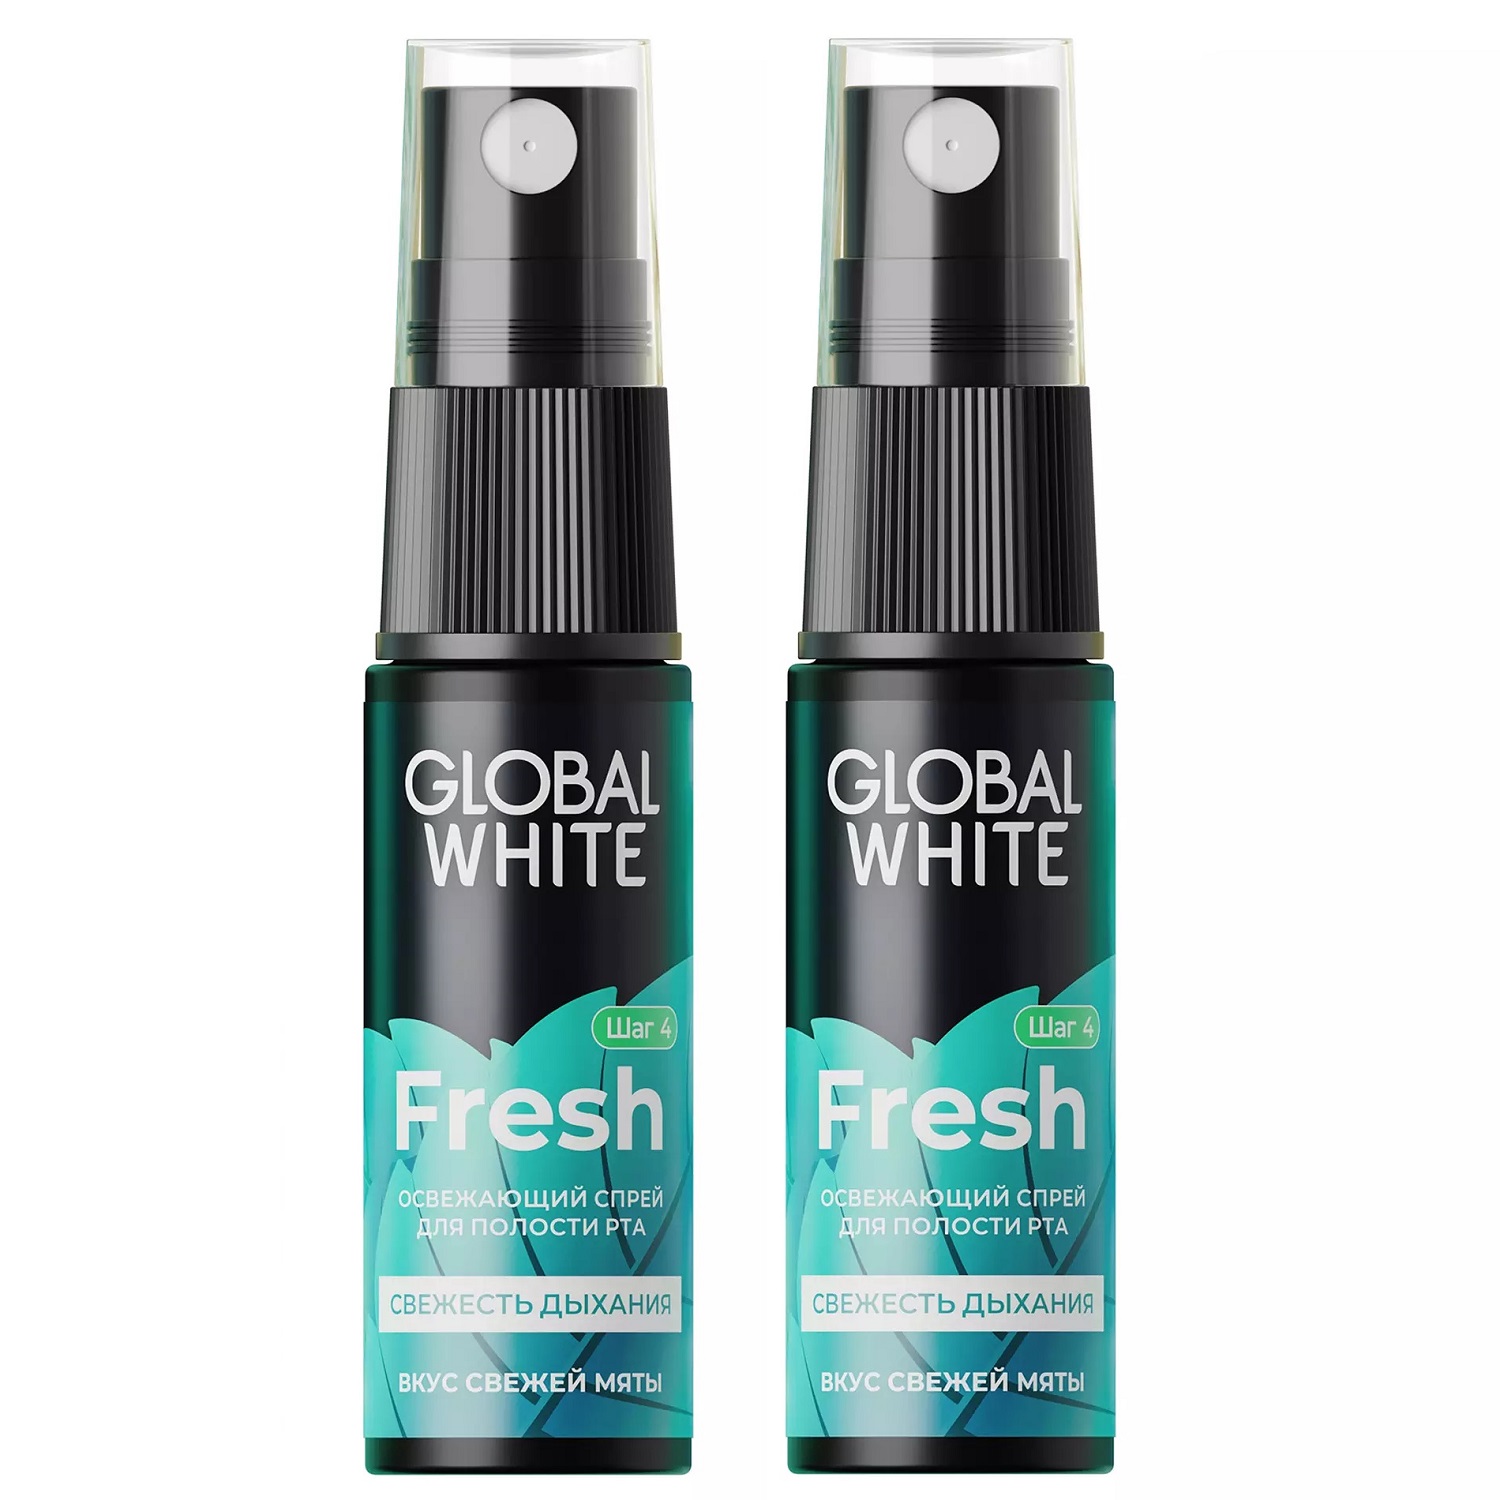 Global White Набор: освежающий спрей для полости рта «Свежее дыхание», 2 х 15 мл (Global White, Поддержание эффекта отбеливания) global white спрей освежающий для полости рта 15 мл 1 шт